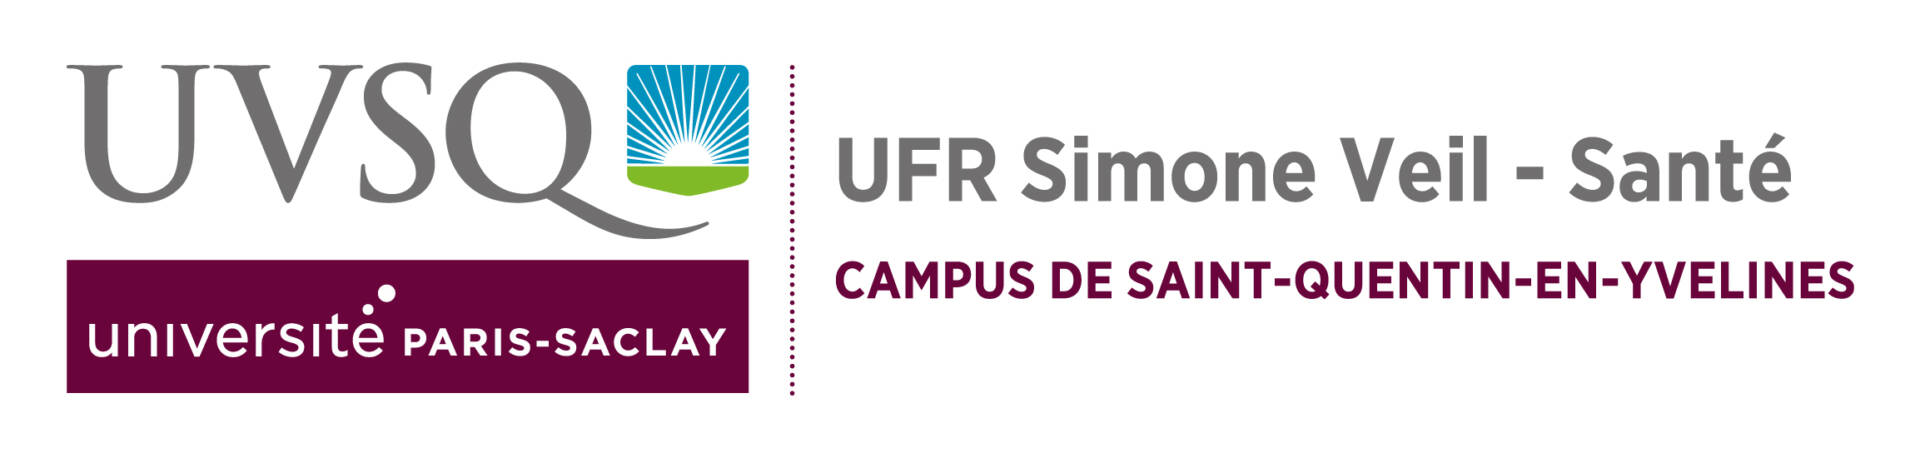 UFR Simone Veil - Santé